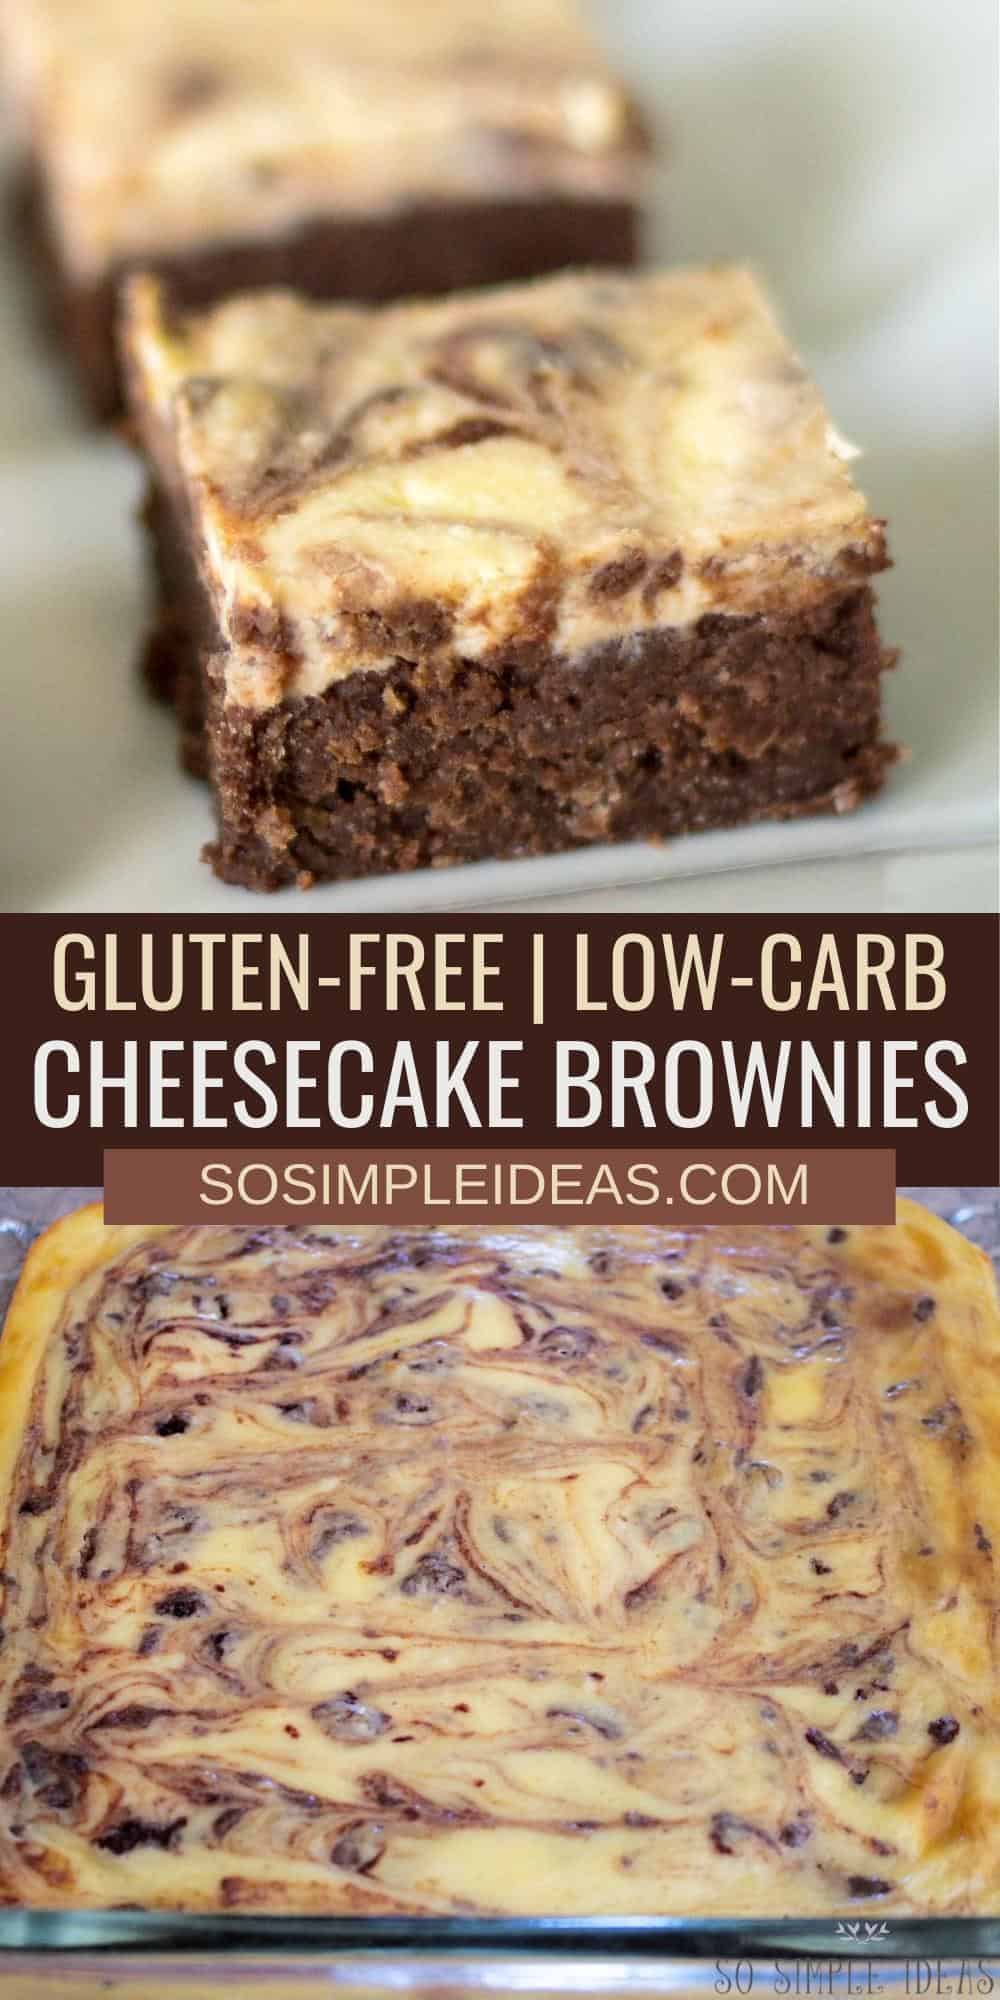 keto gluten free cheesecake brownies pinterest image.